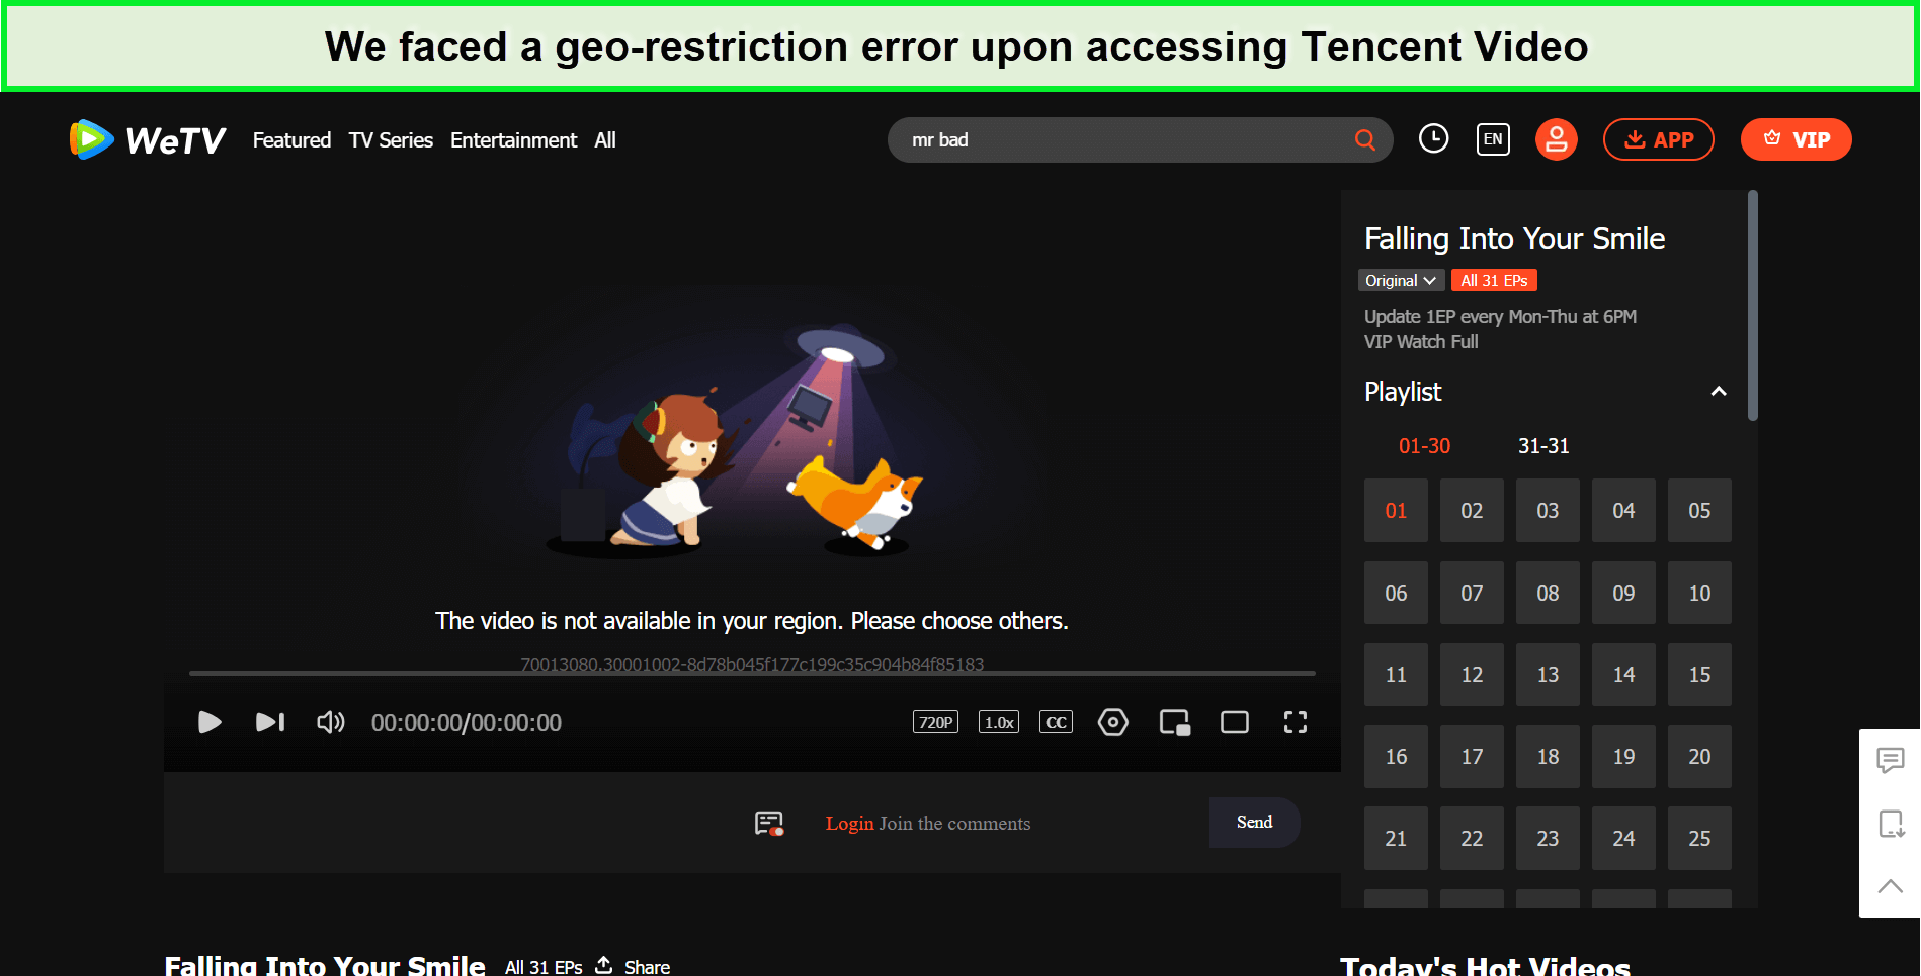 tencent-video-outside-Hong Kong-geo-restriction-error